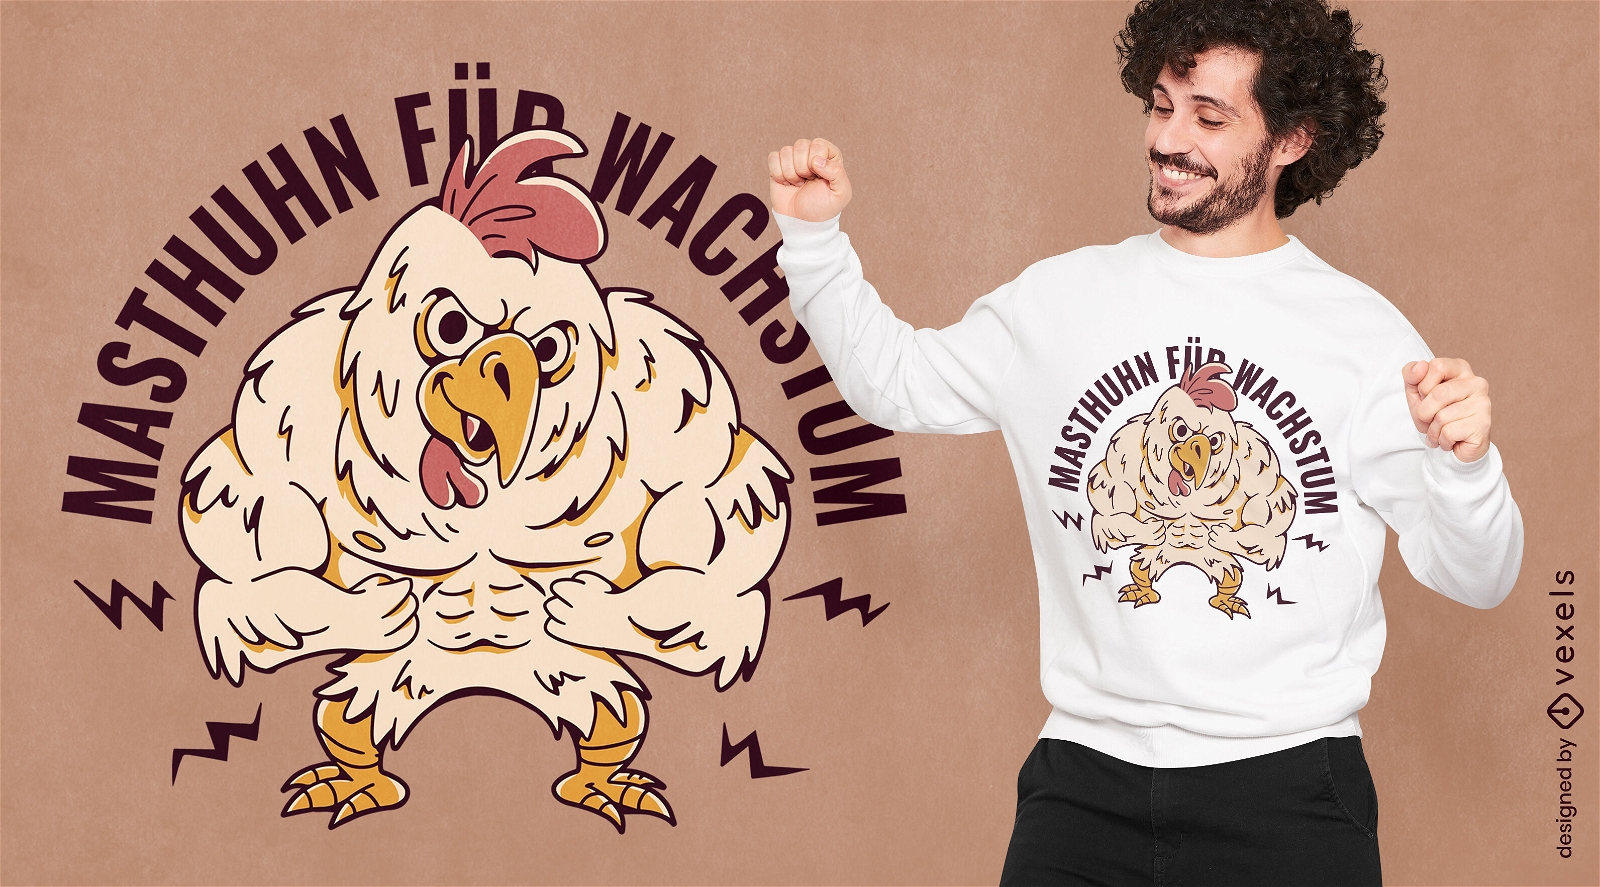 Strong chicken farm animal t-shirt design